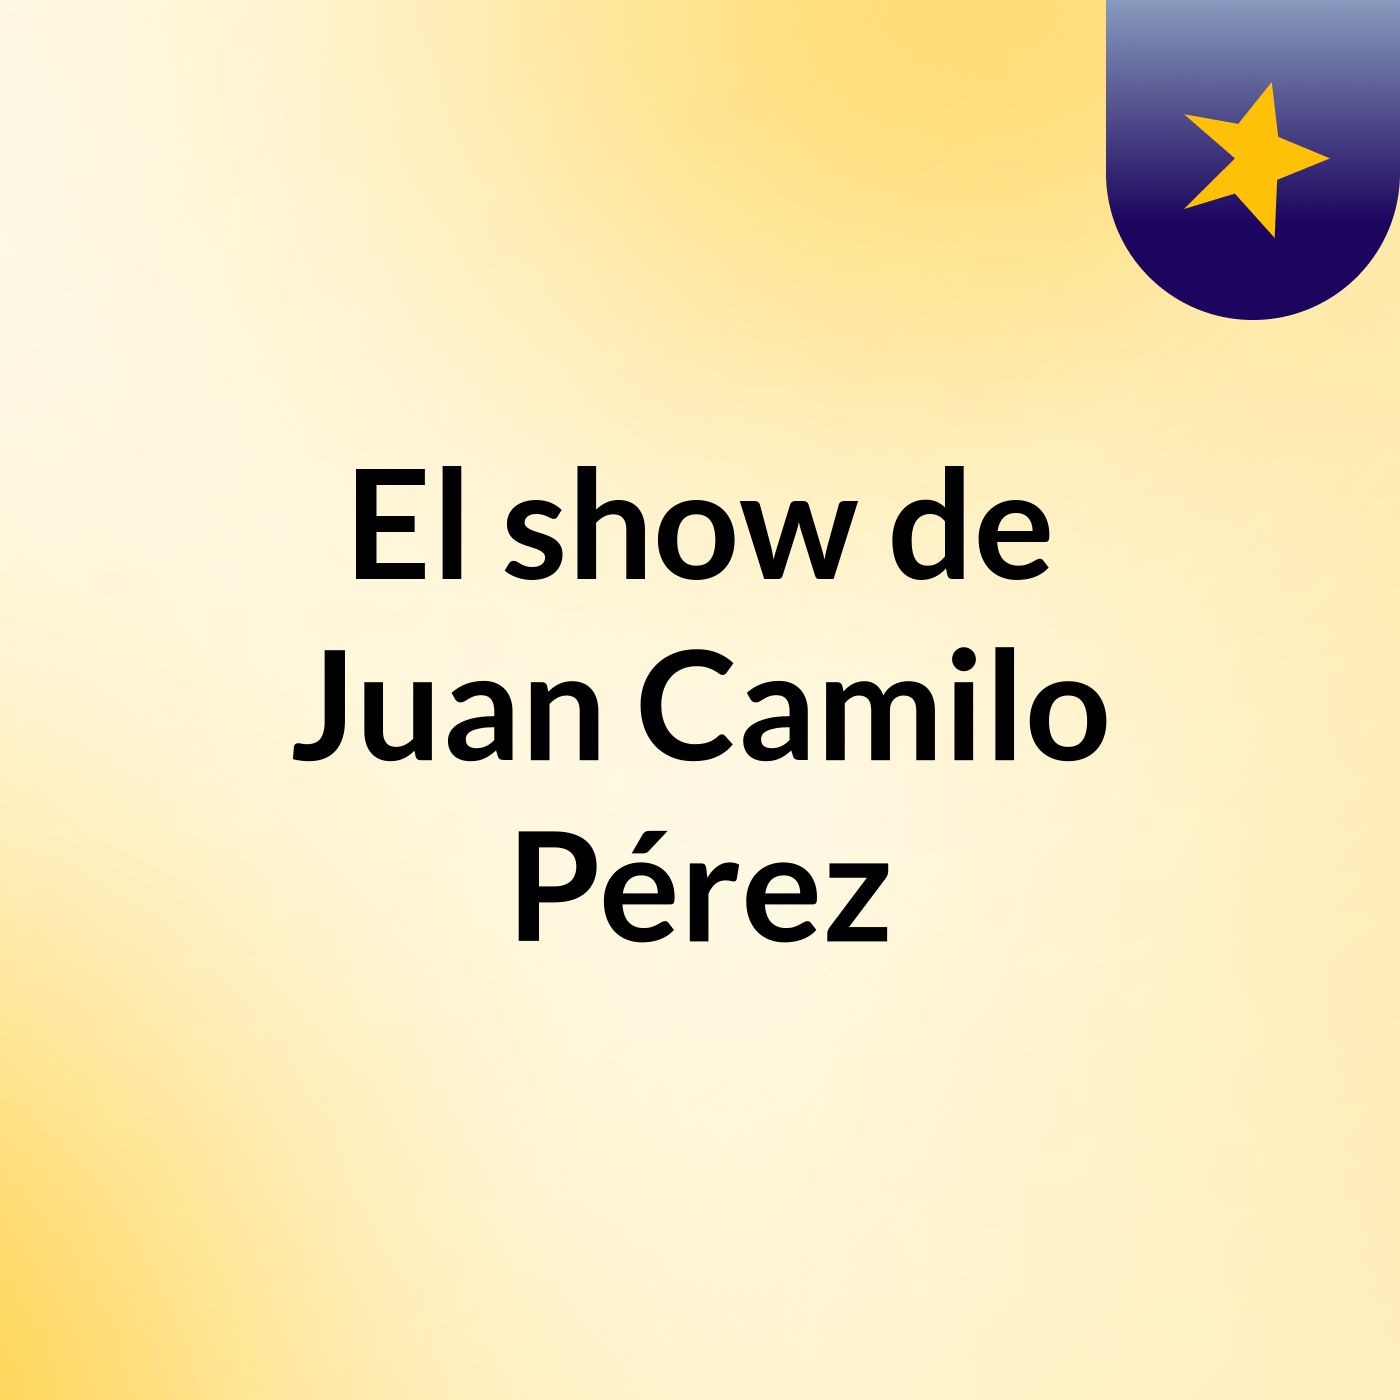 El show de Juan Camilo Pérez